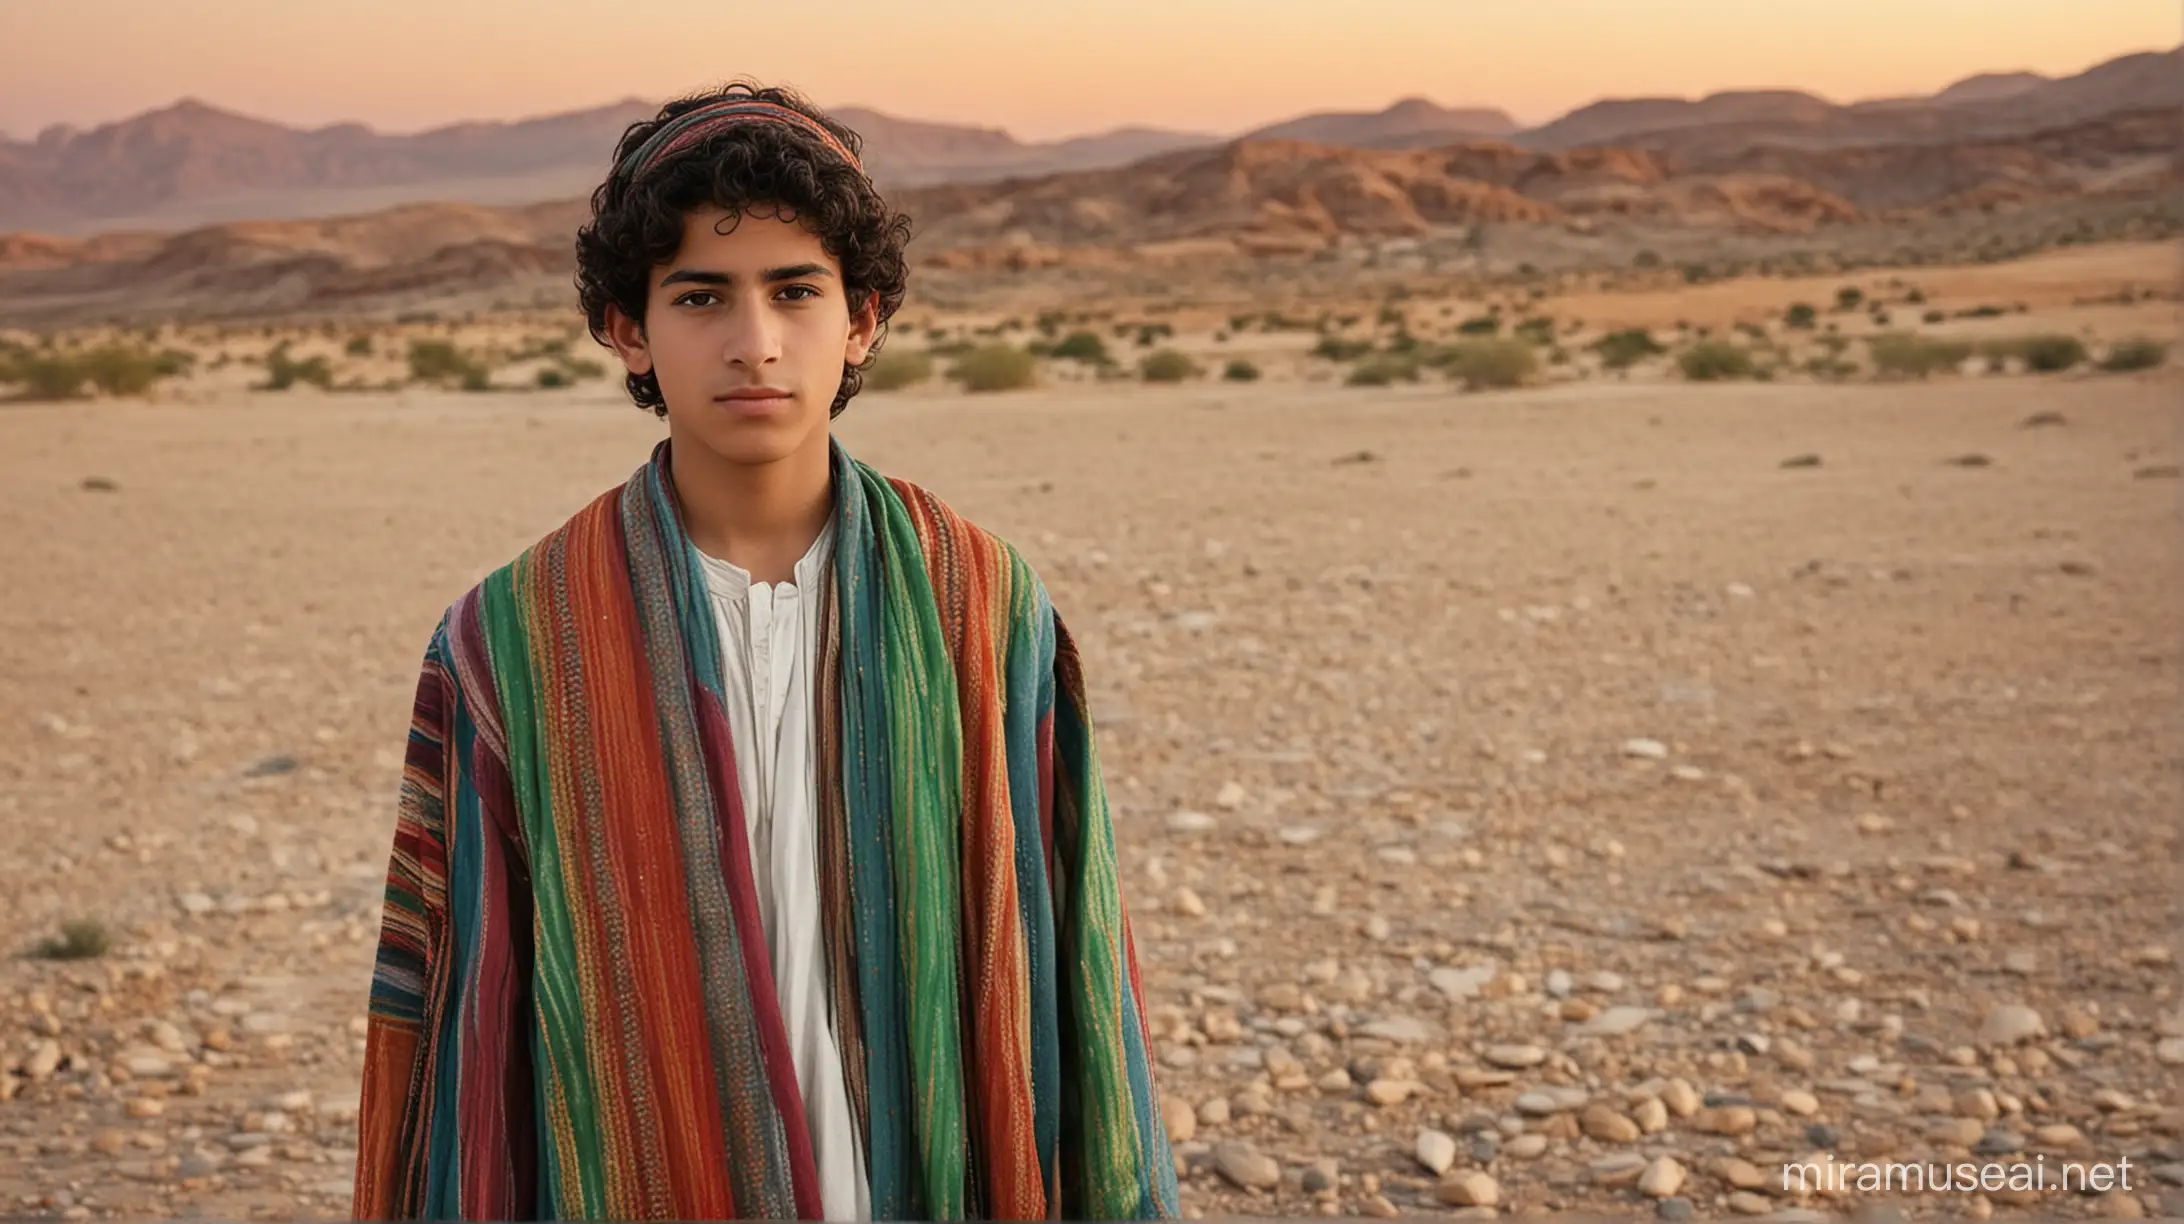 Middle Eastern Teenager in Colorful Coat Amid Biblical Desert Scene